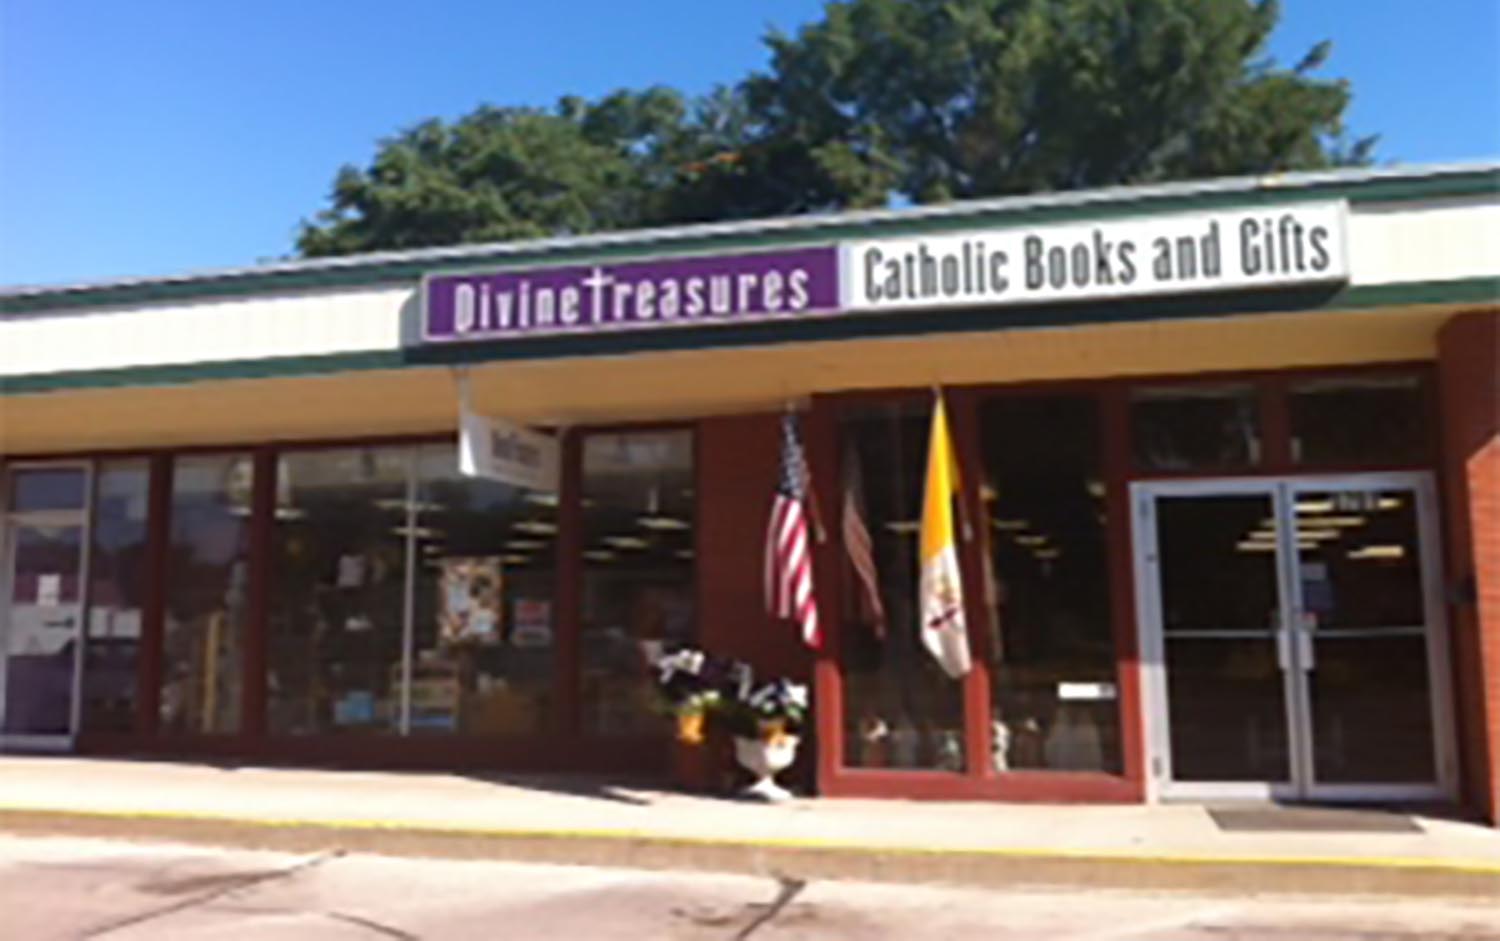 Divine Treasures Storefront